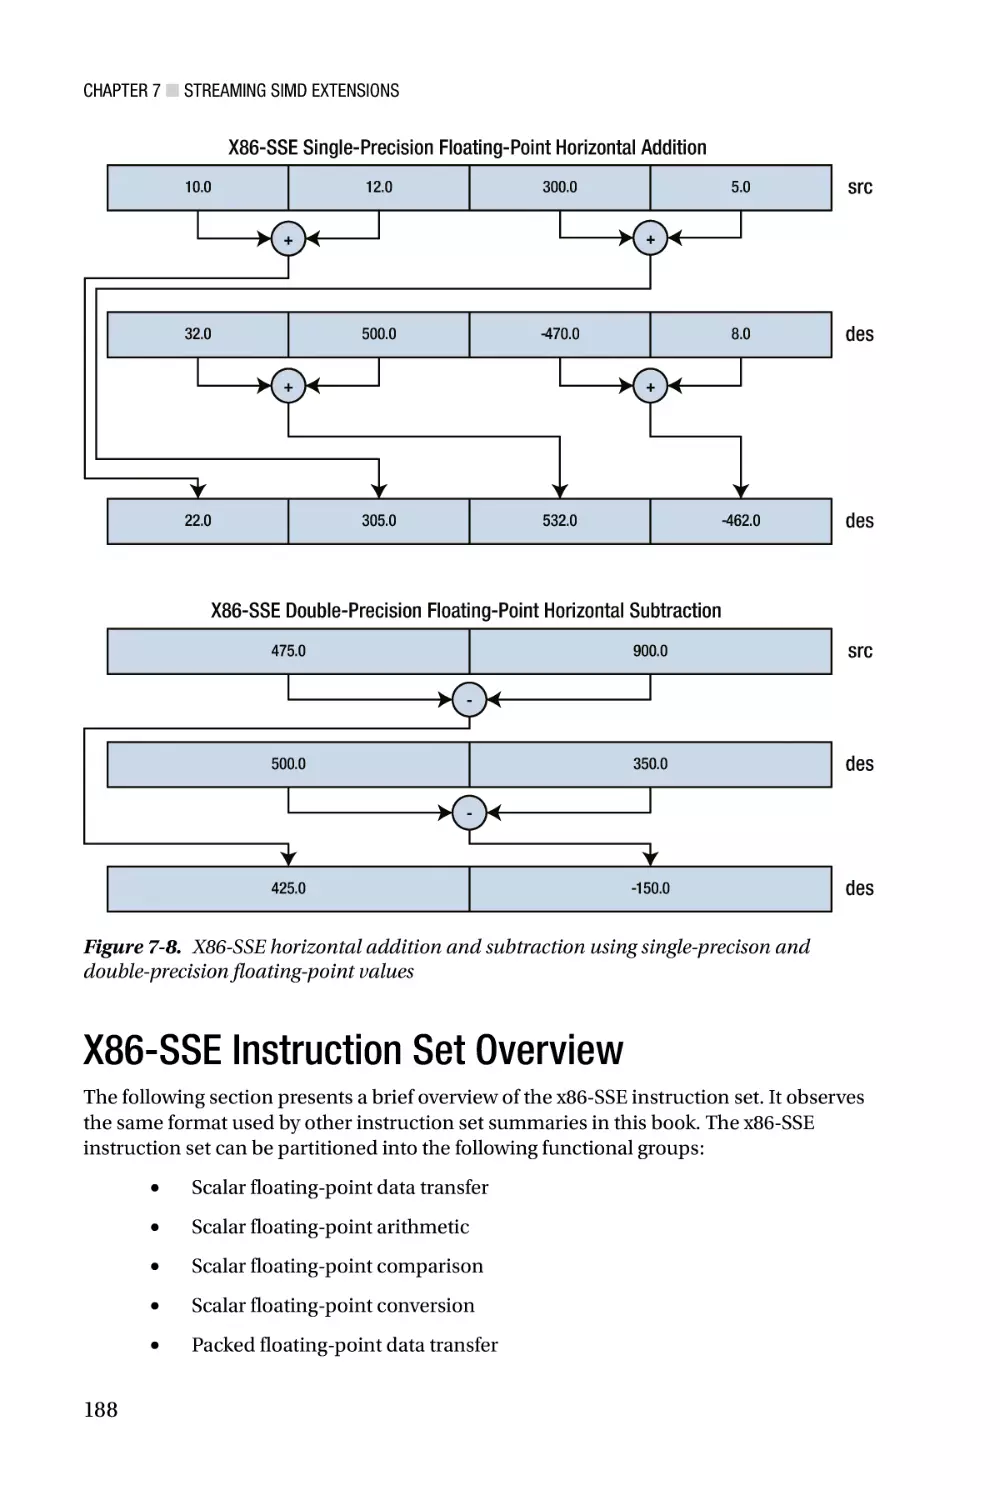 X86-SSE Instruction Set Overview